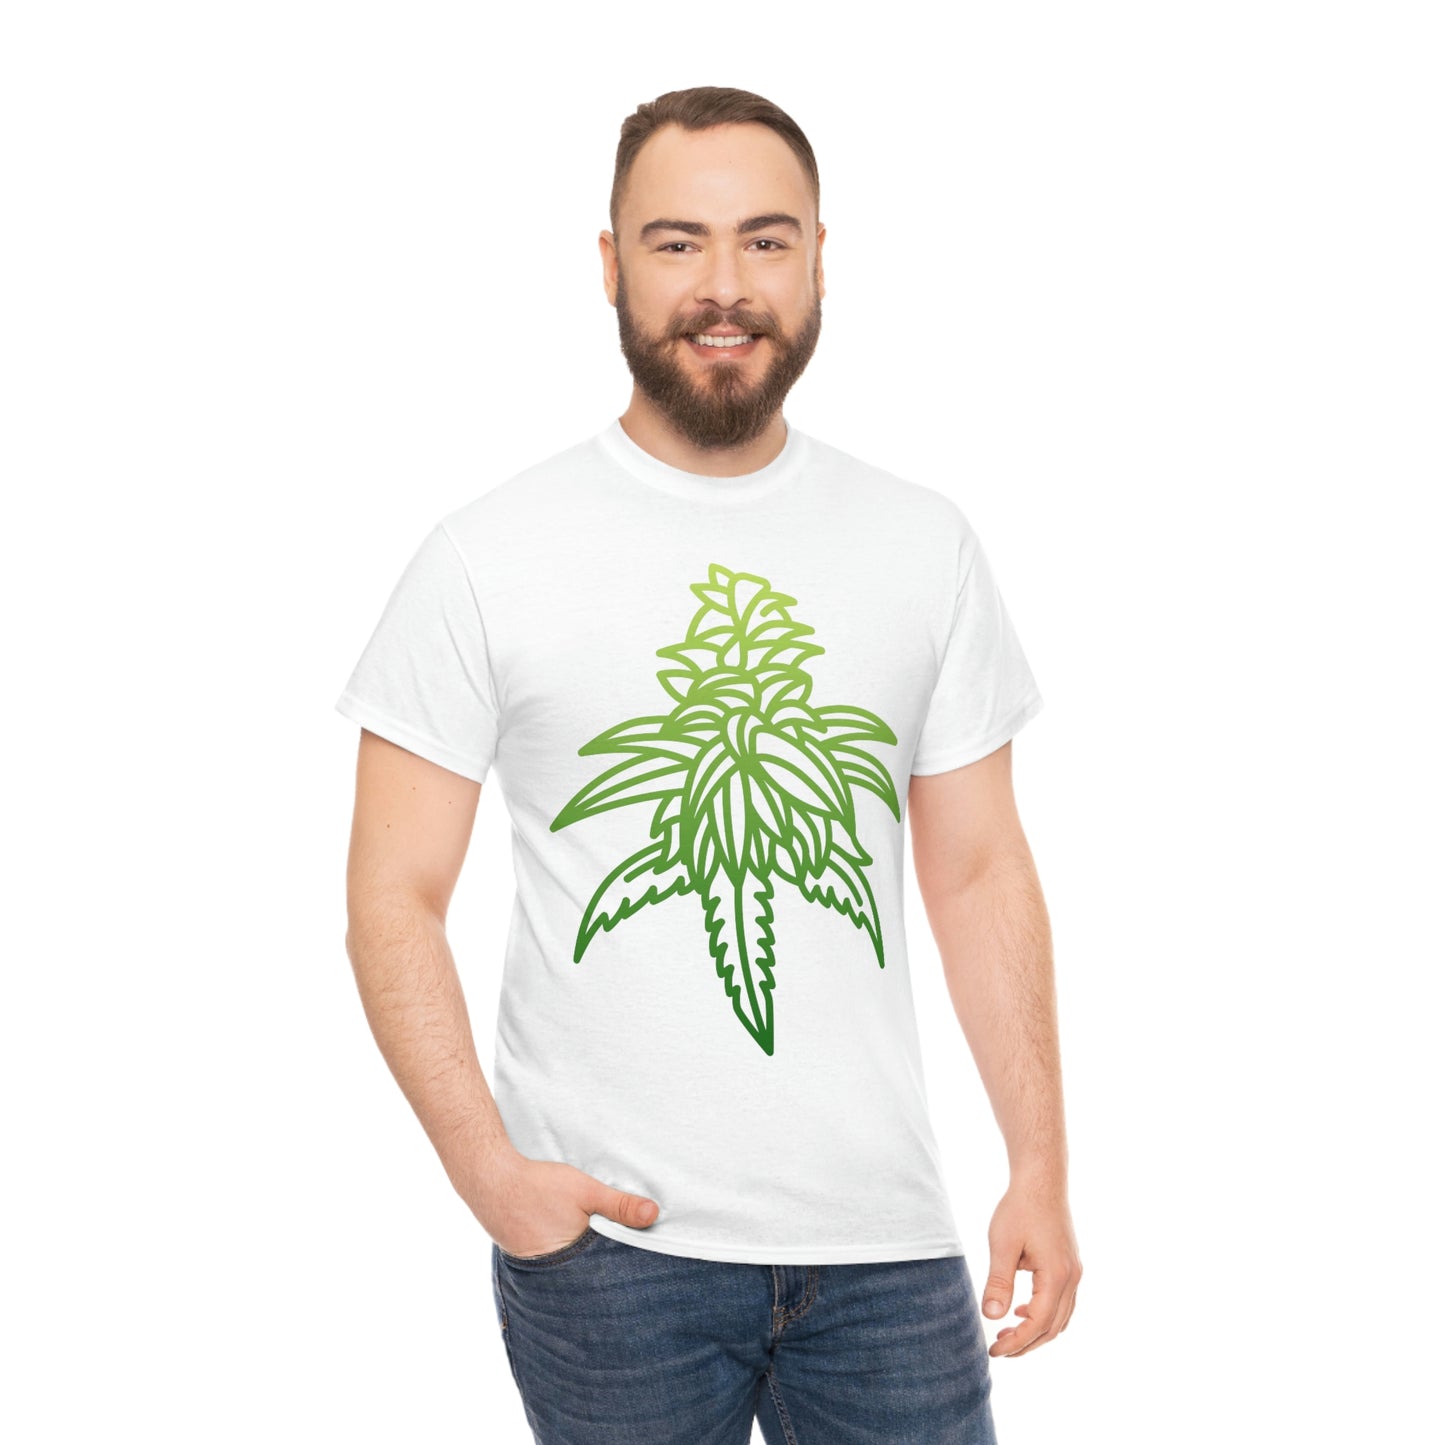 a man wearing a Sour Diesel Cannabis Tee with a green marijuana leaf design.